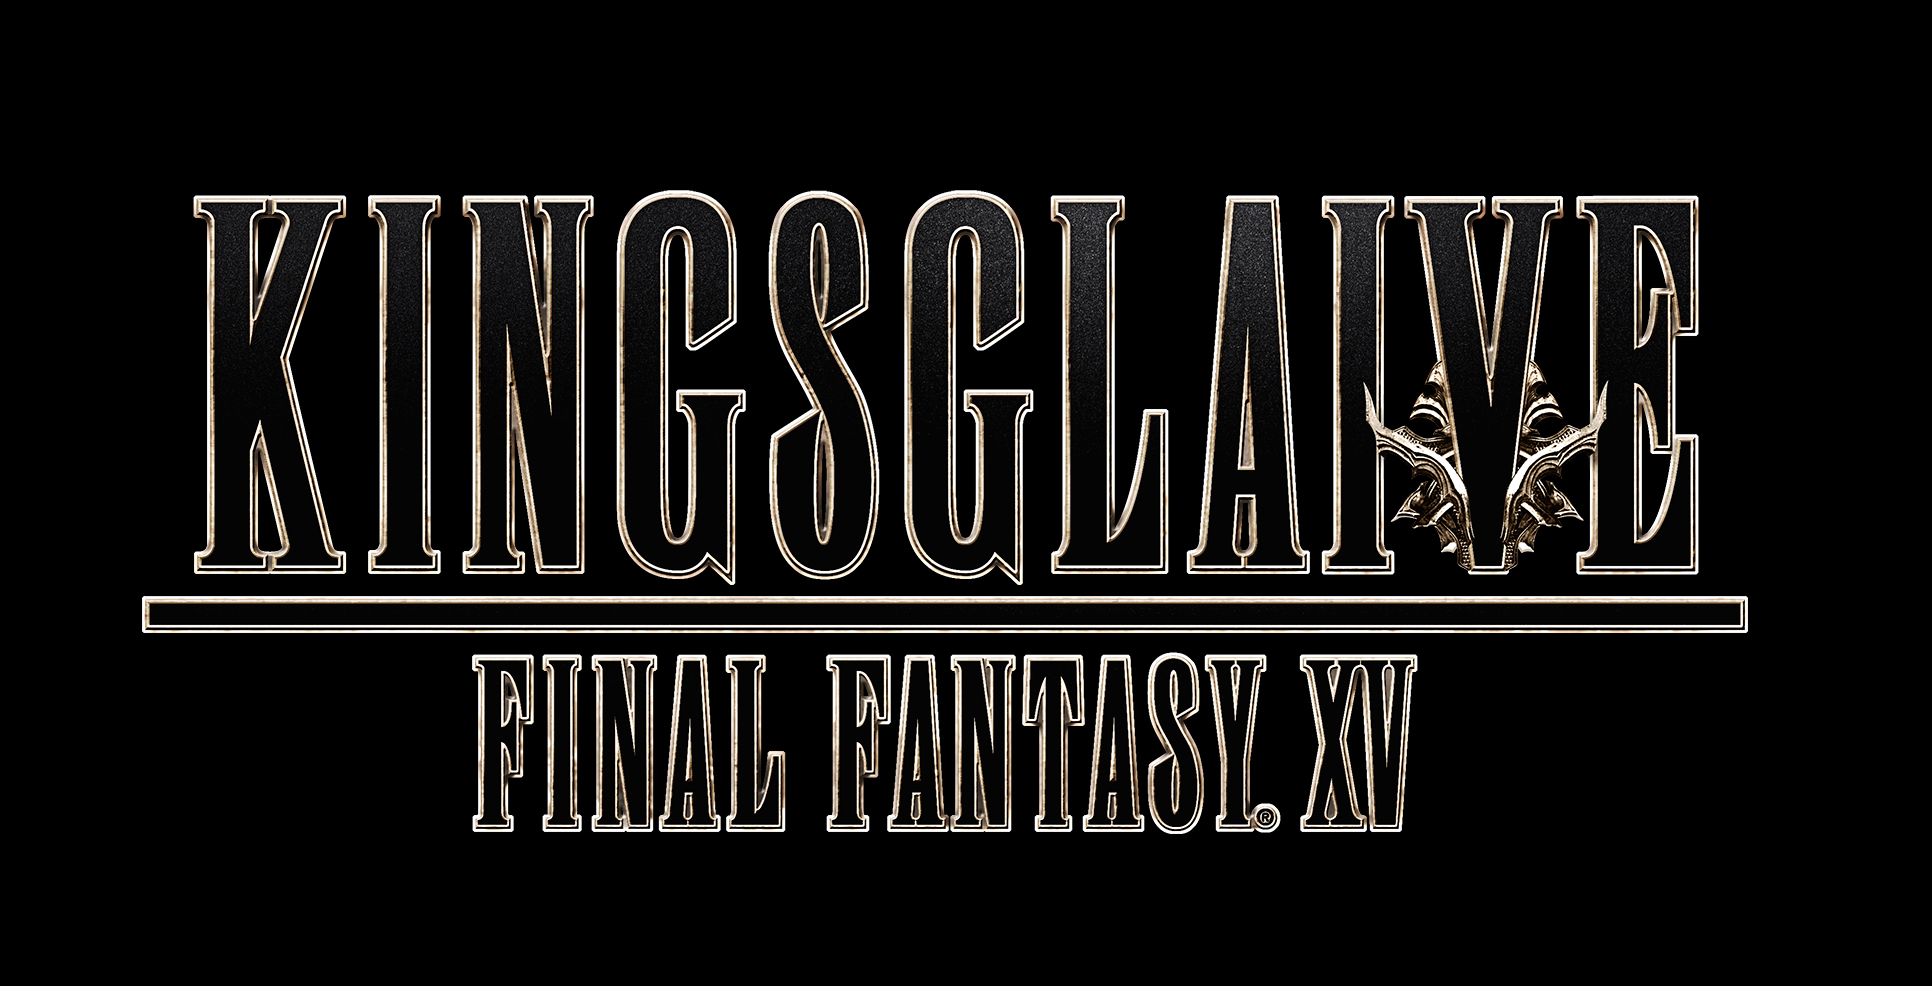 15._final_fantasy_xv_kingsglaive.jpg